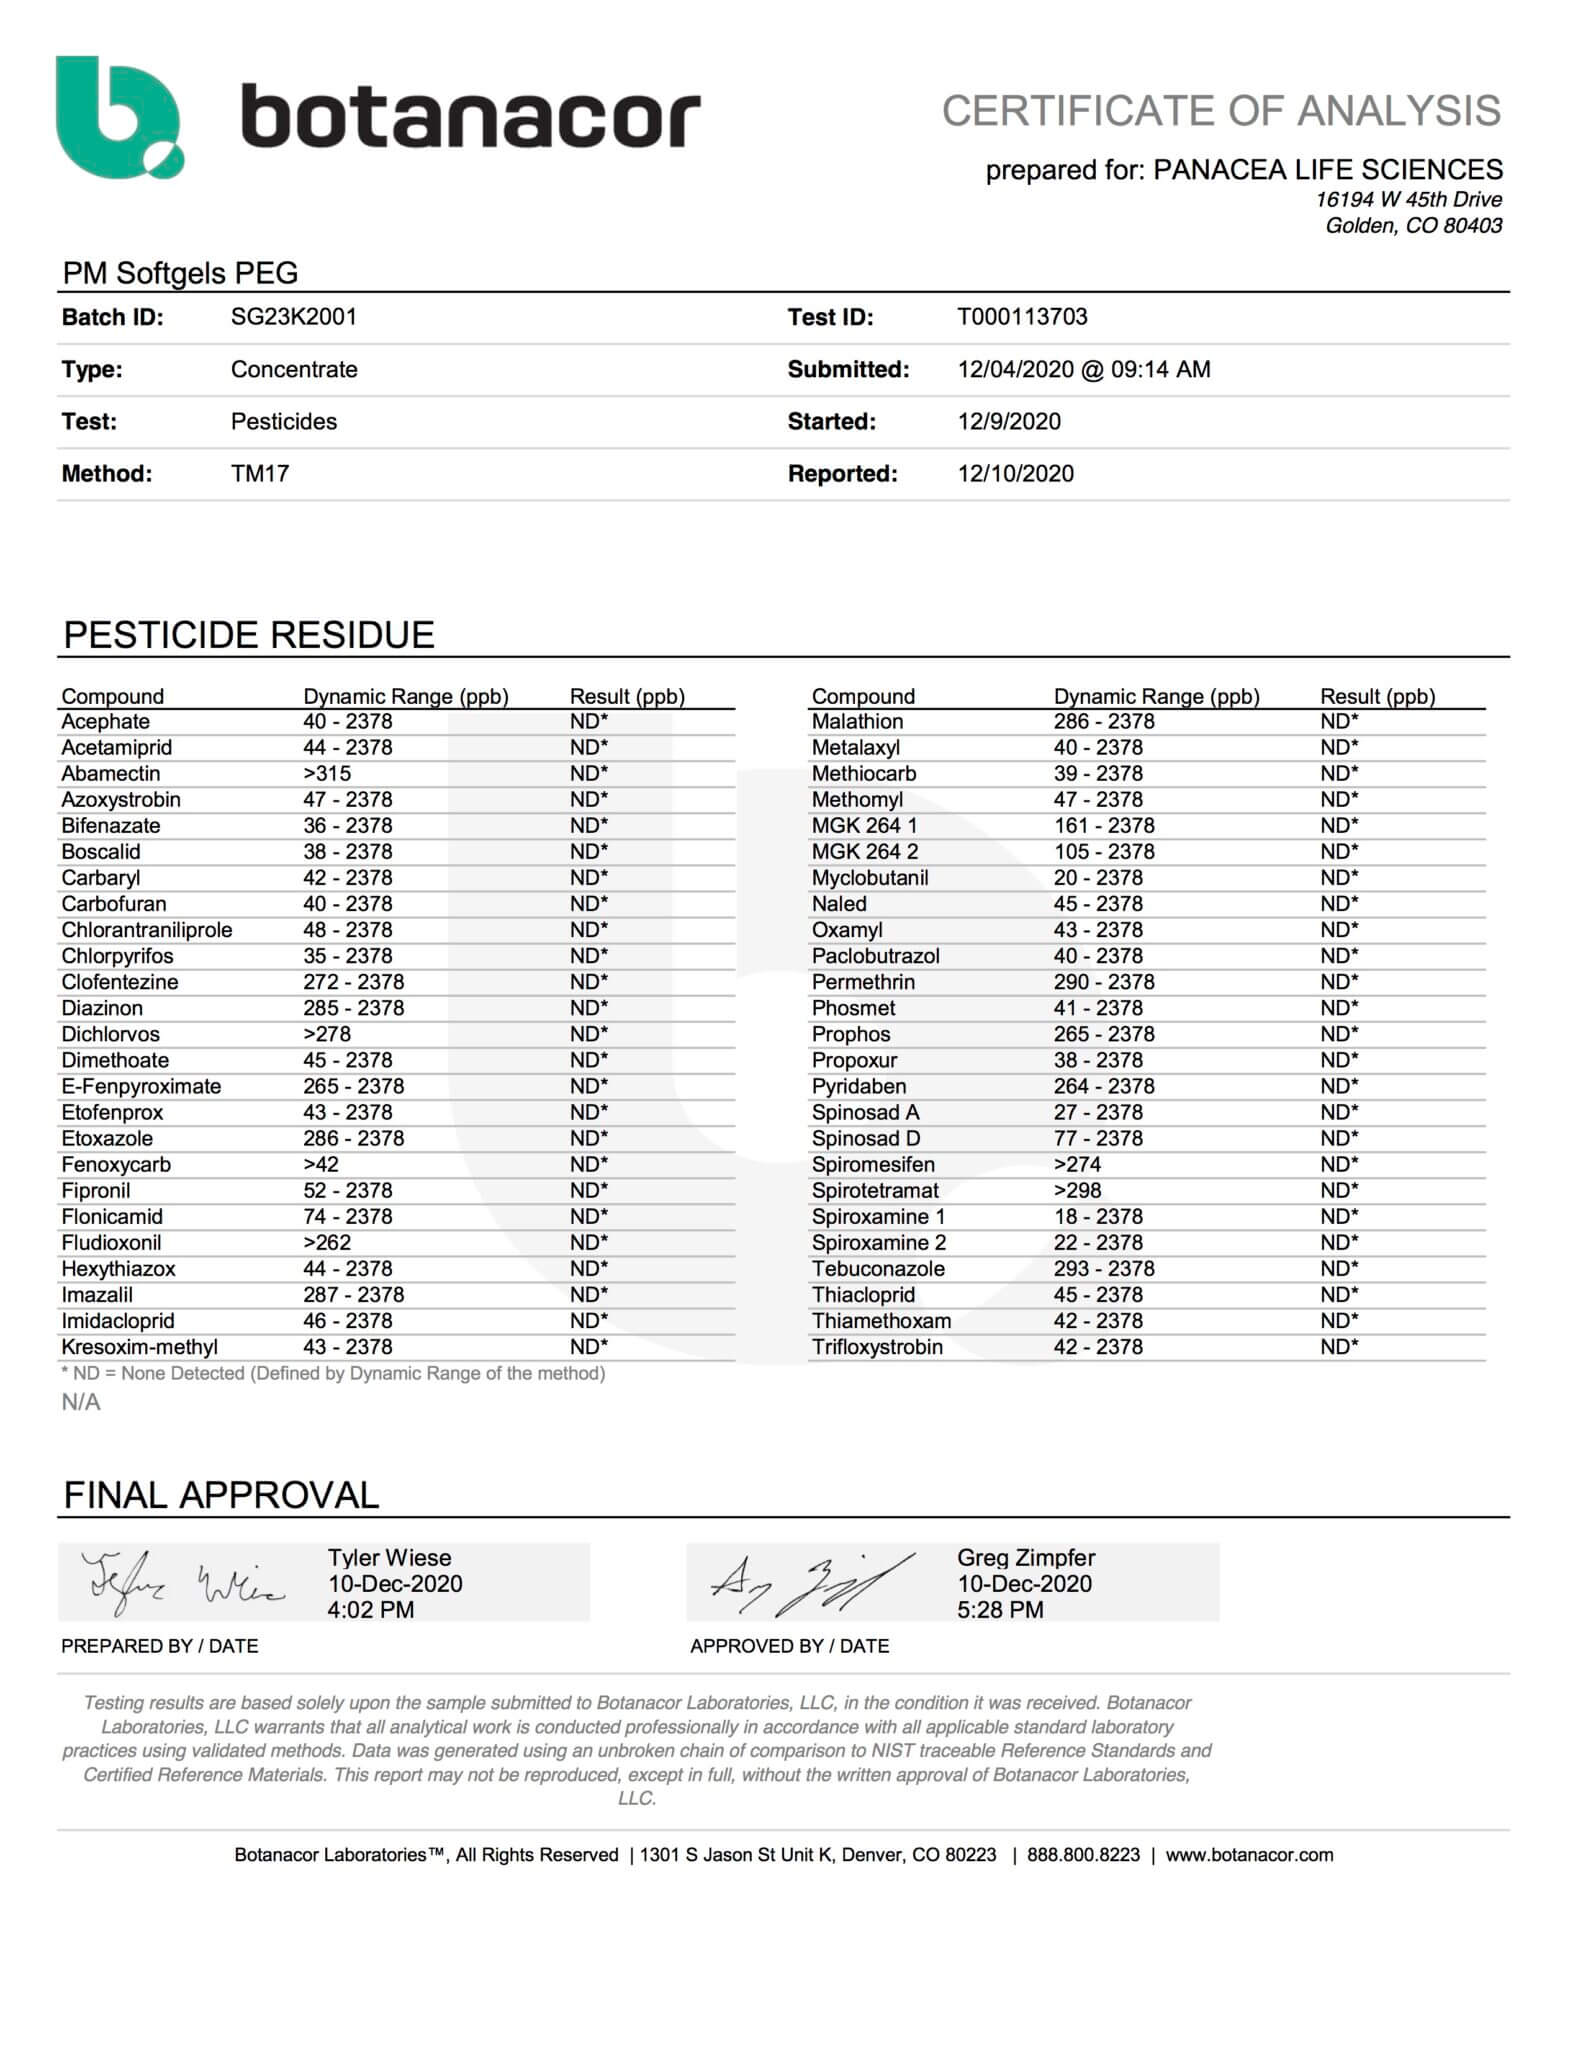 Panacea Test Results - Batch SG23K2001